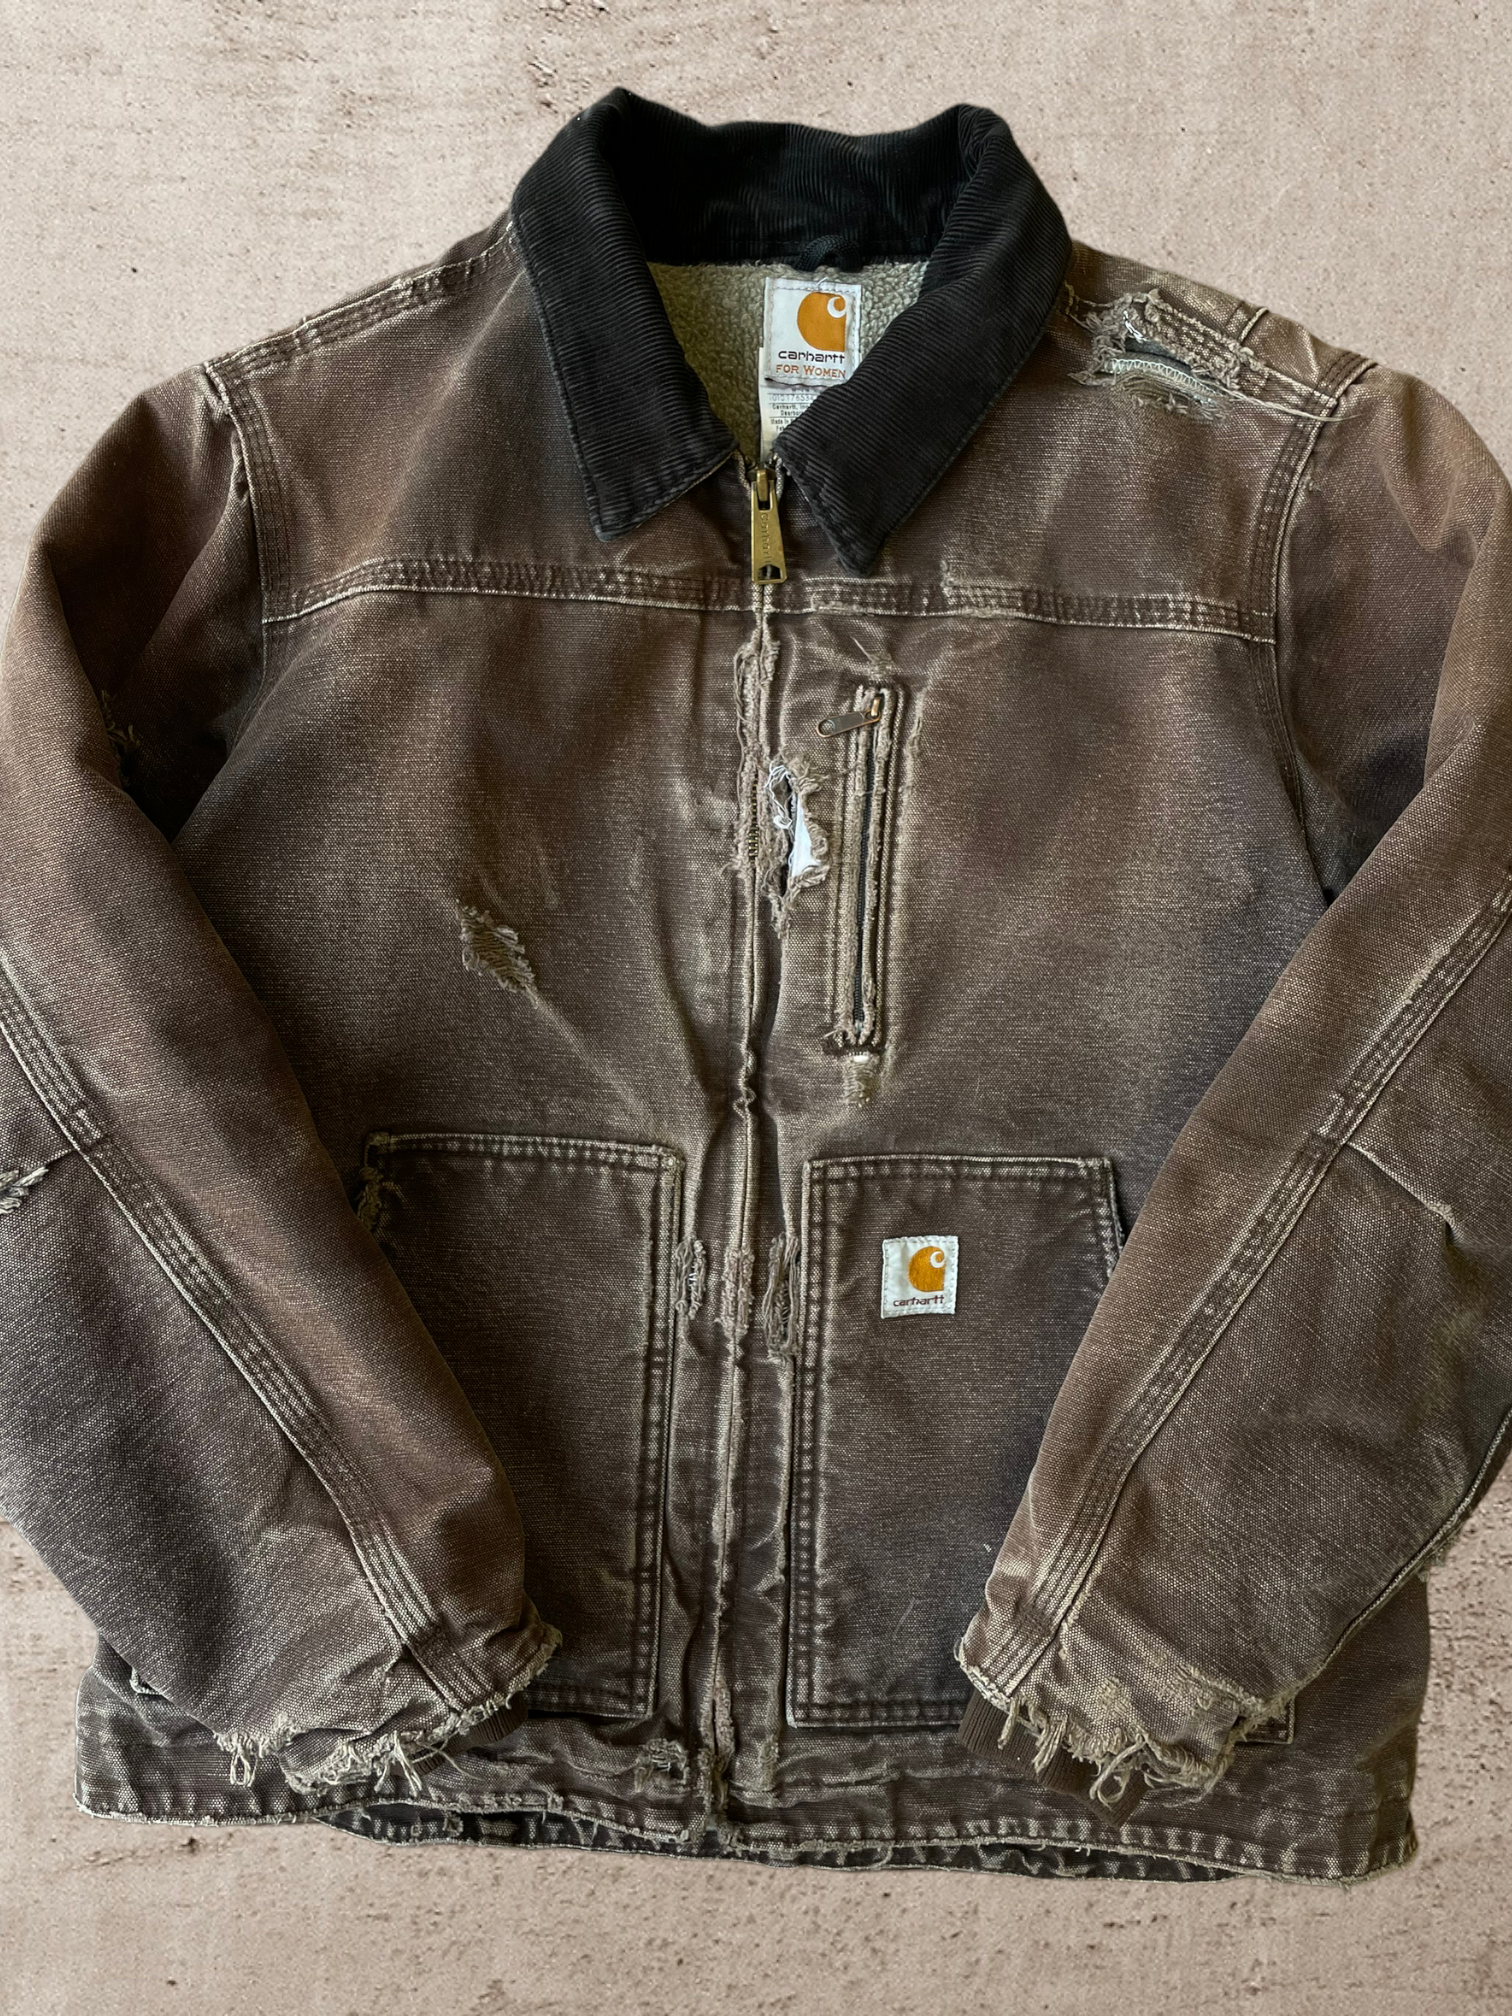 Distressed Carhartt Fleece Lined Jacket - Small